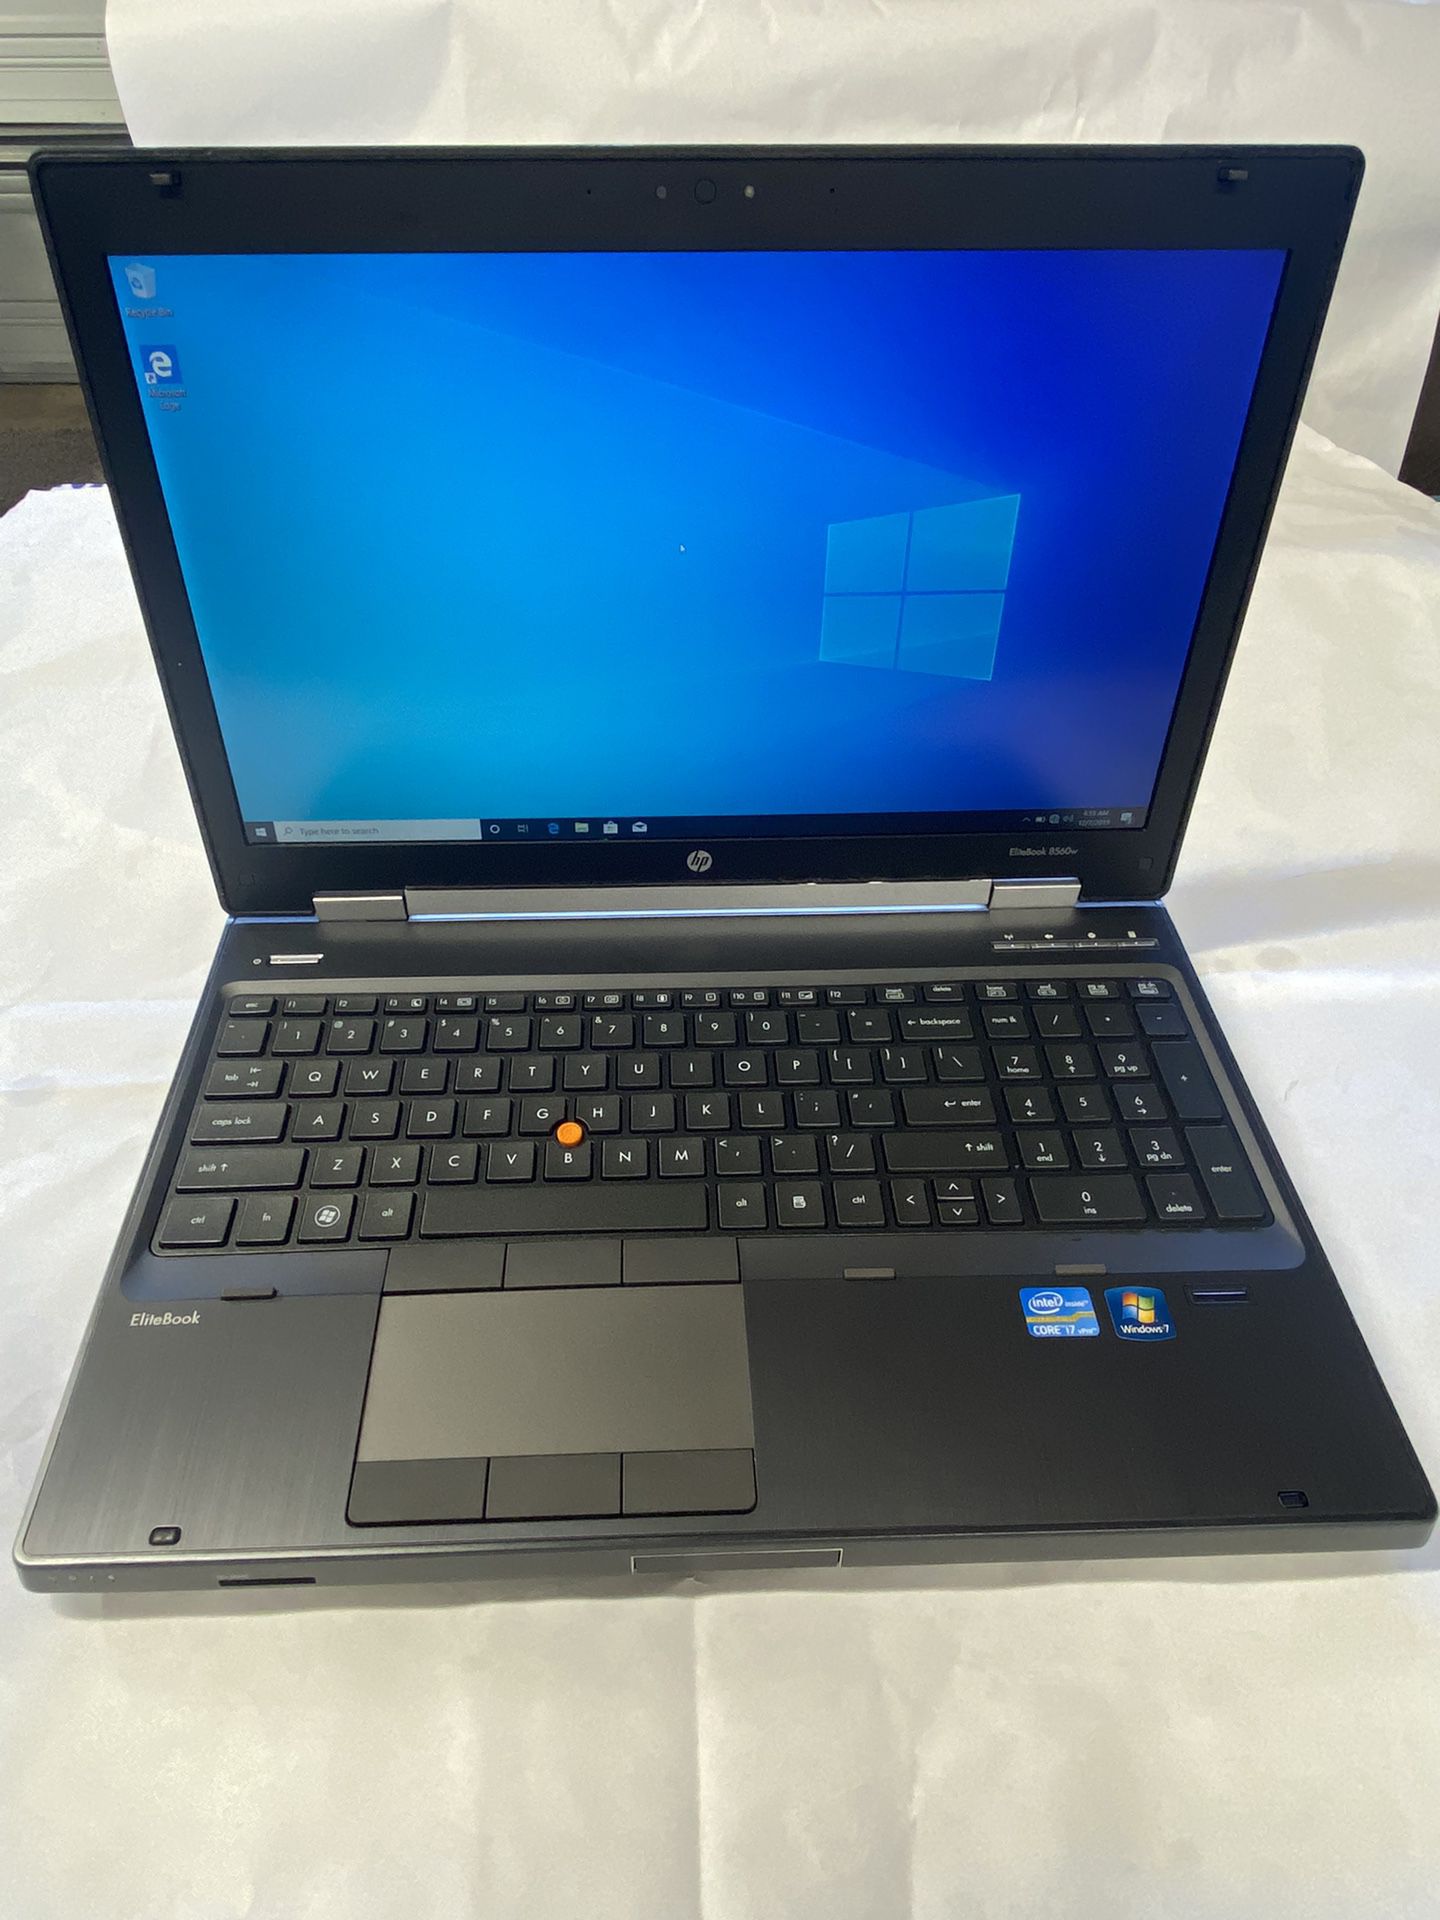 Laptop HP 8560W. i7. 